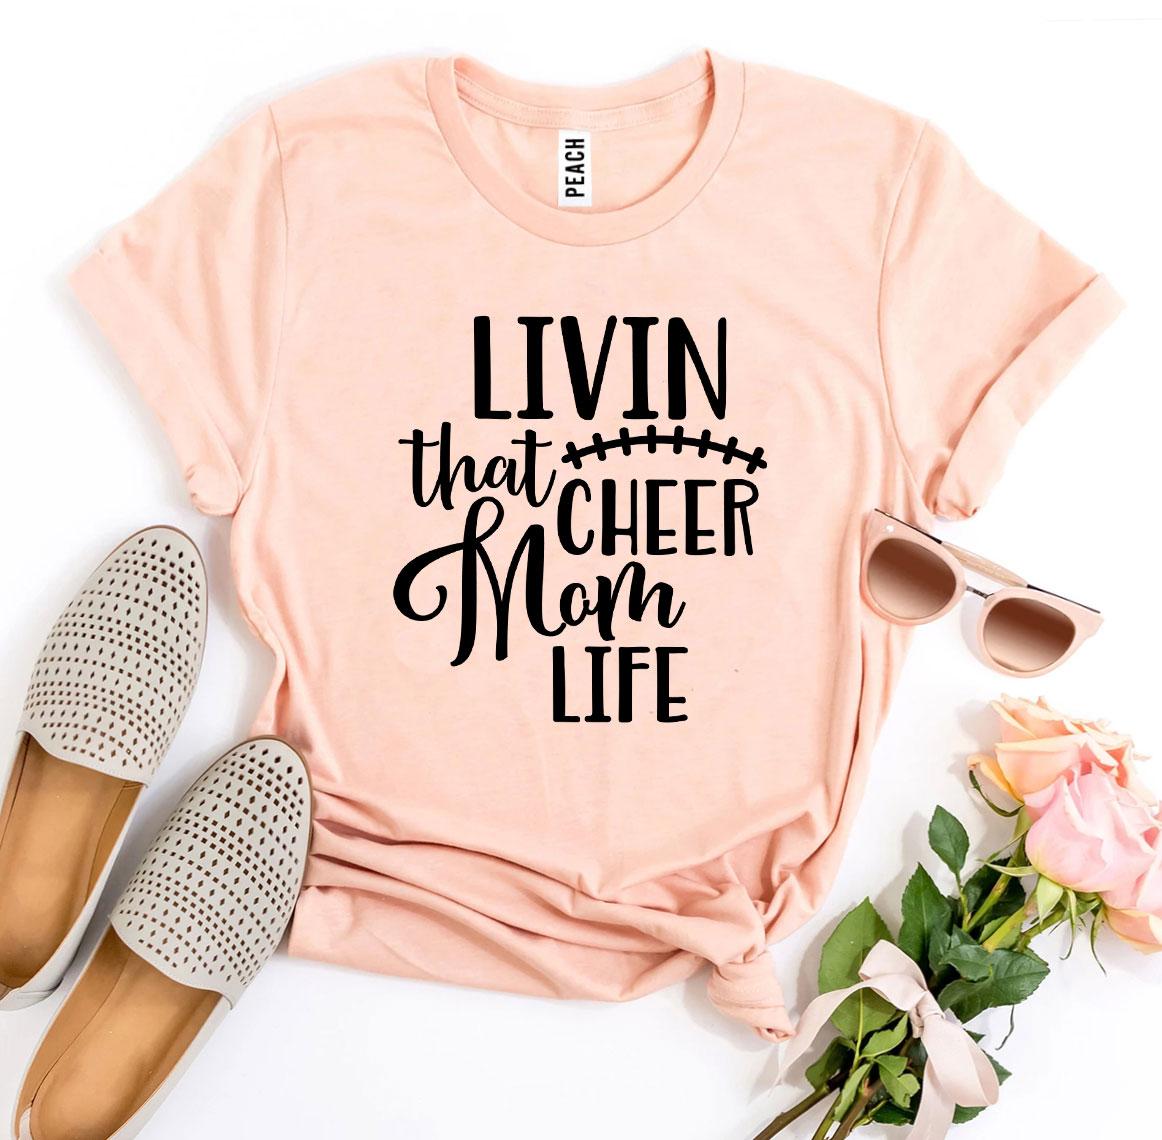 Livin That Cheer Mom Life T-shirt